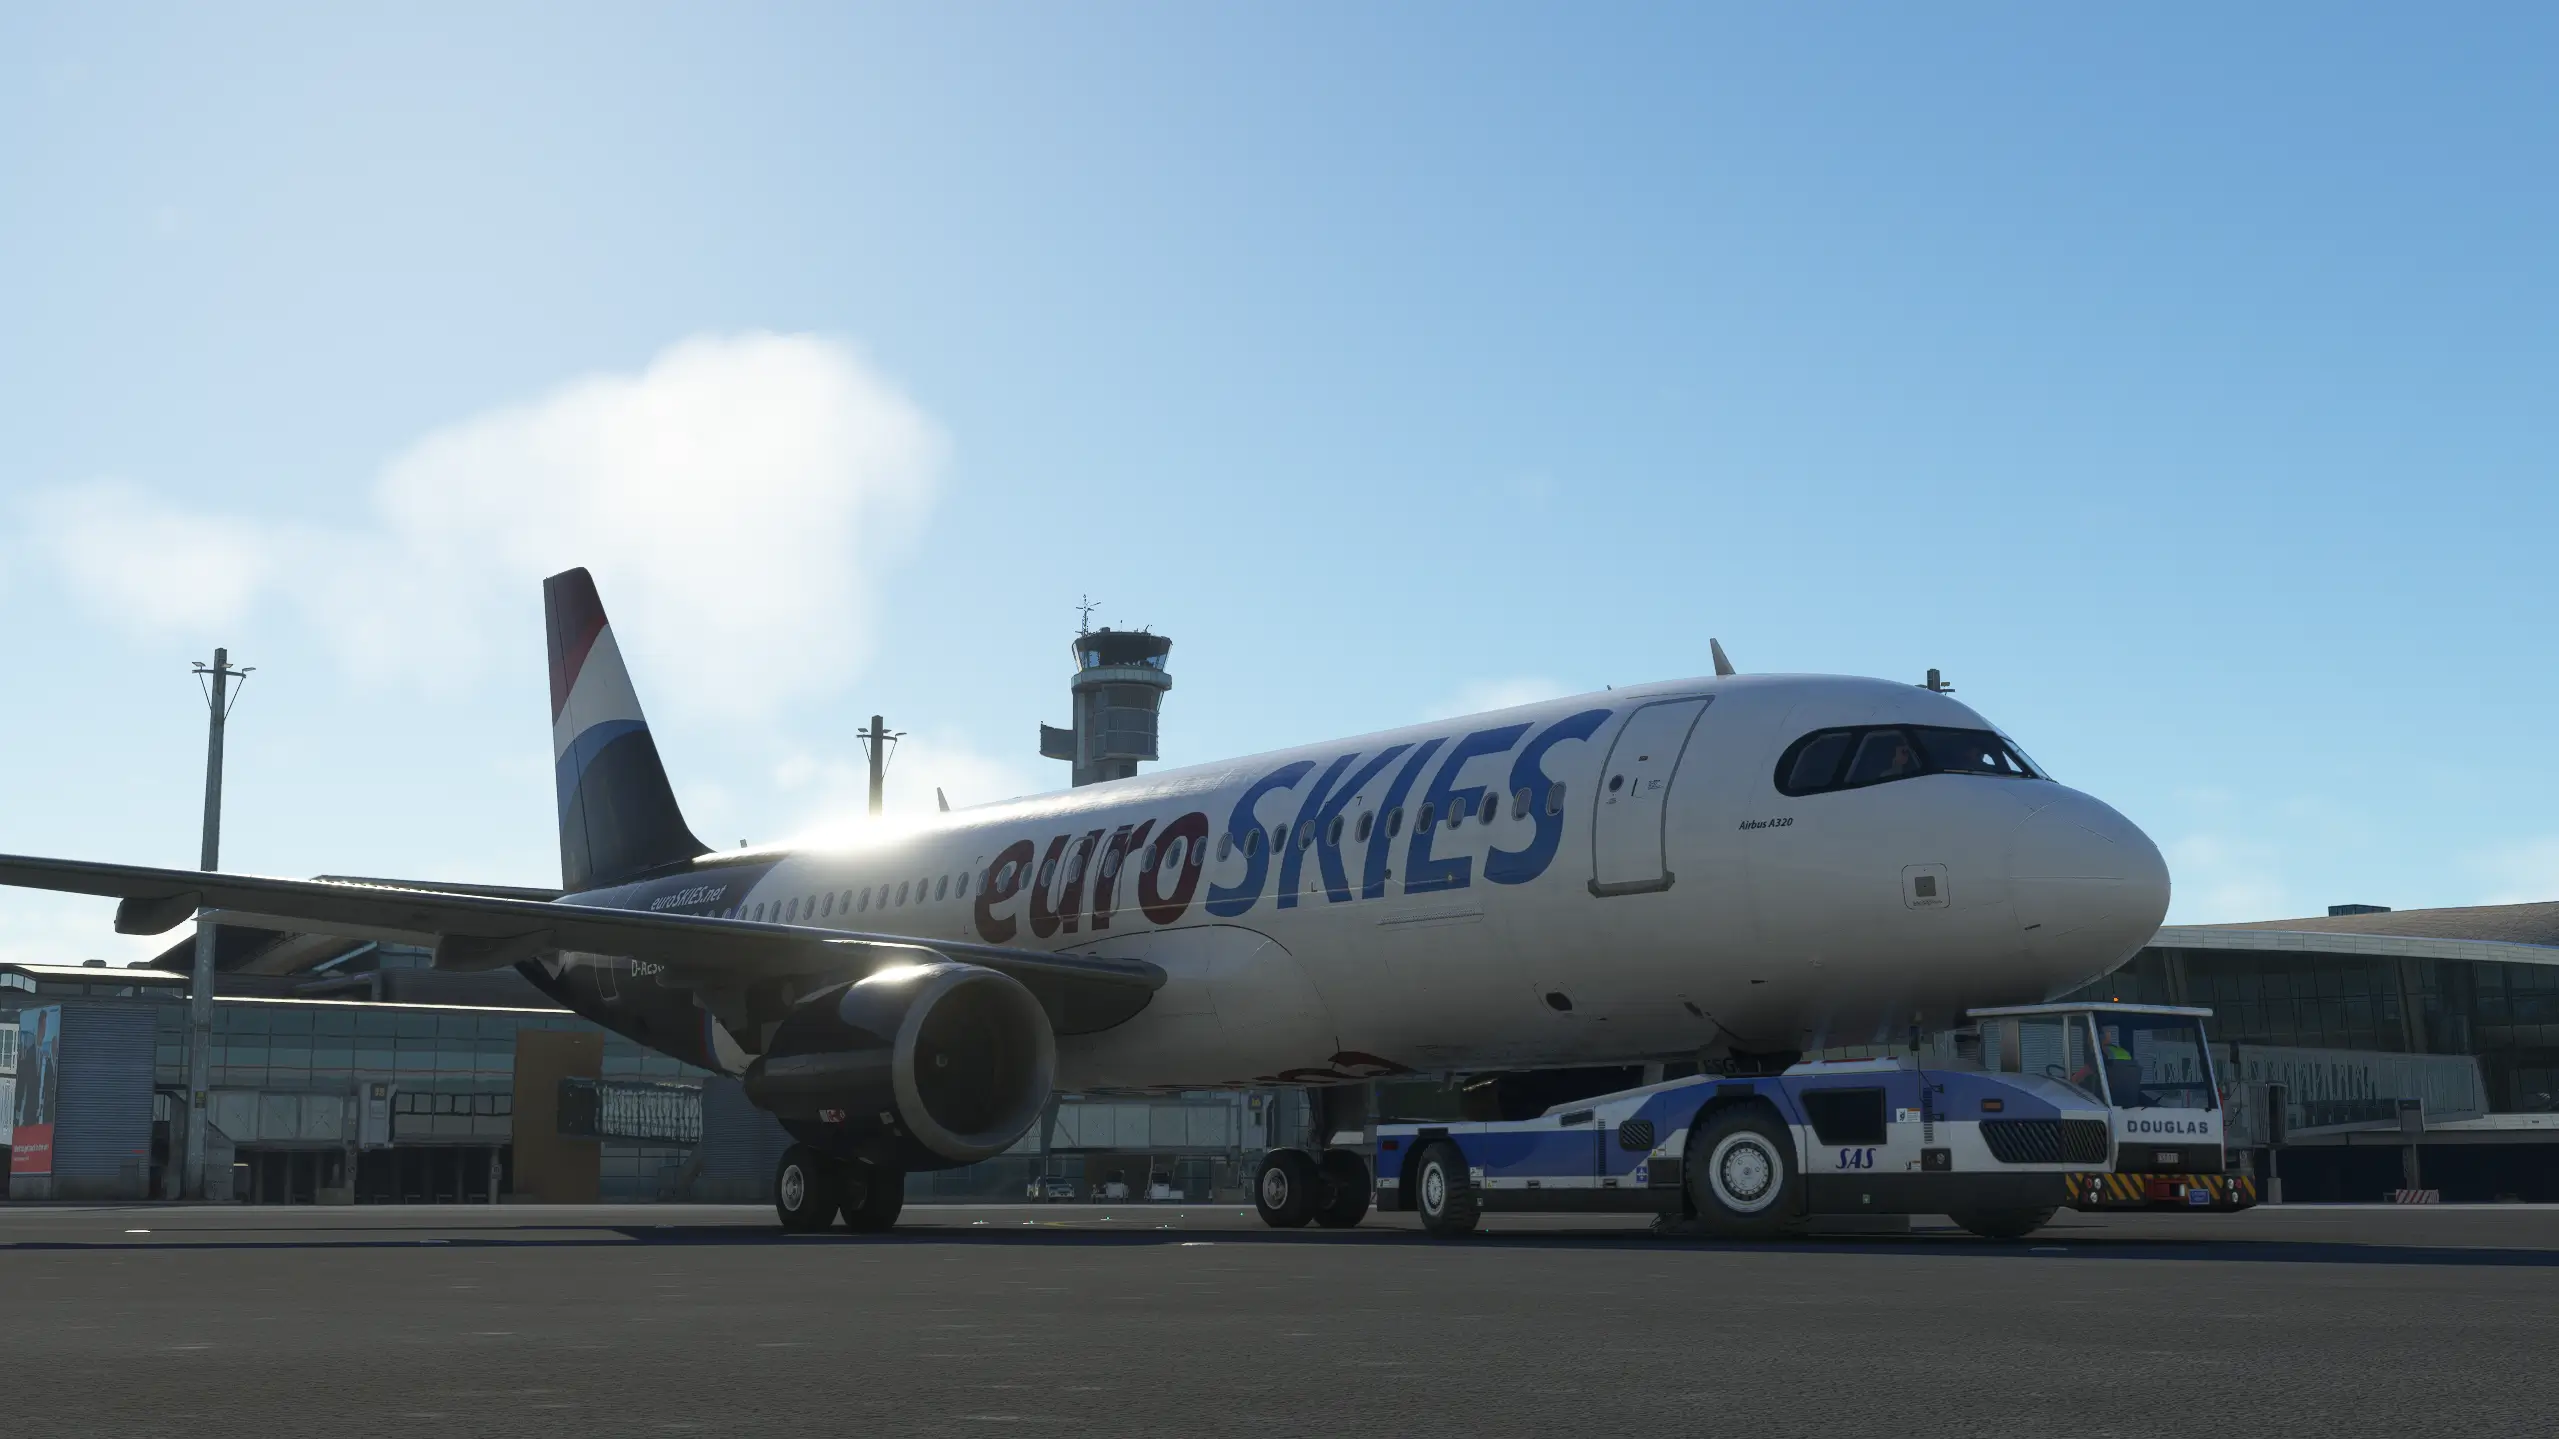 euroSKIES virtual airline airbus during pushback operation